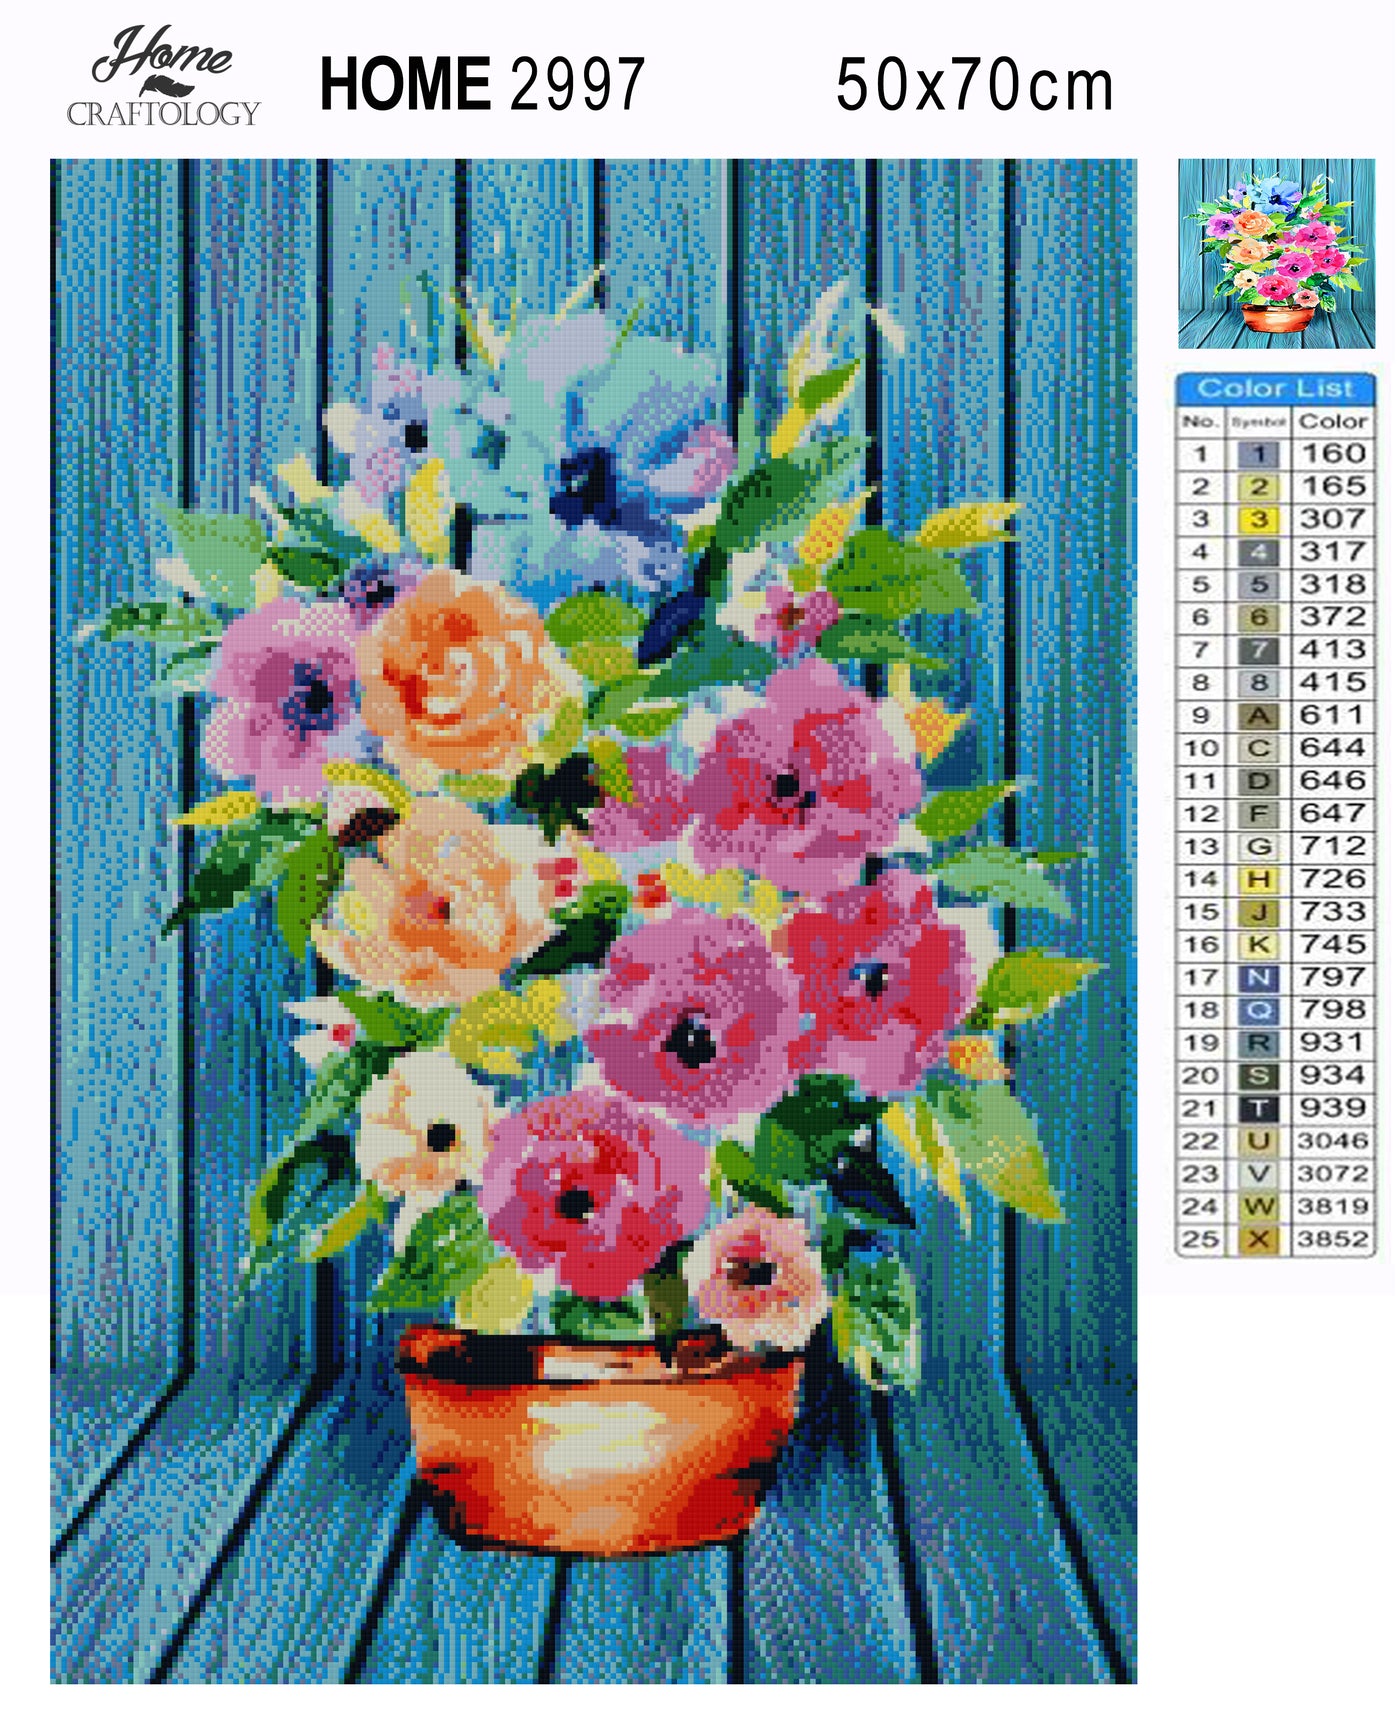 Watercolor Flowers in a Vase - Premium Diamond Painting Kit